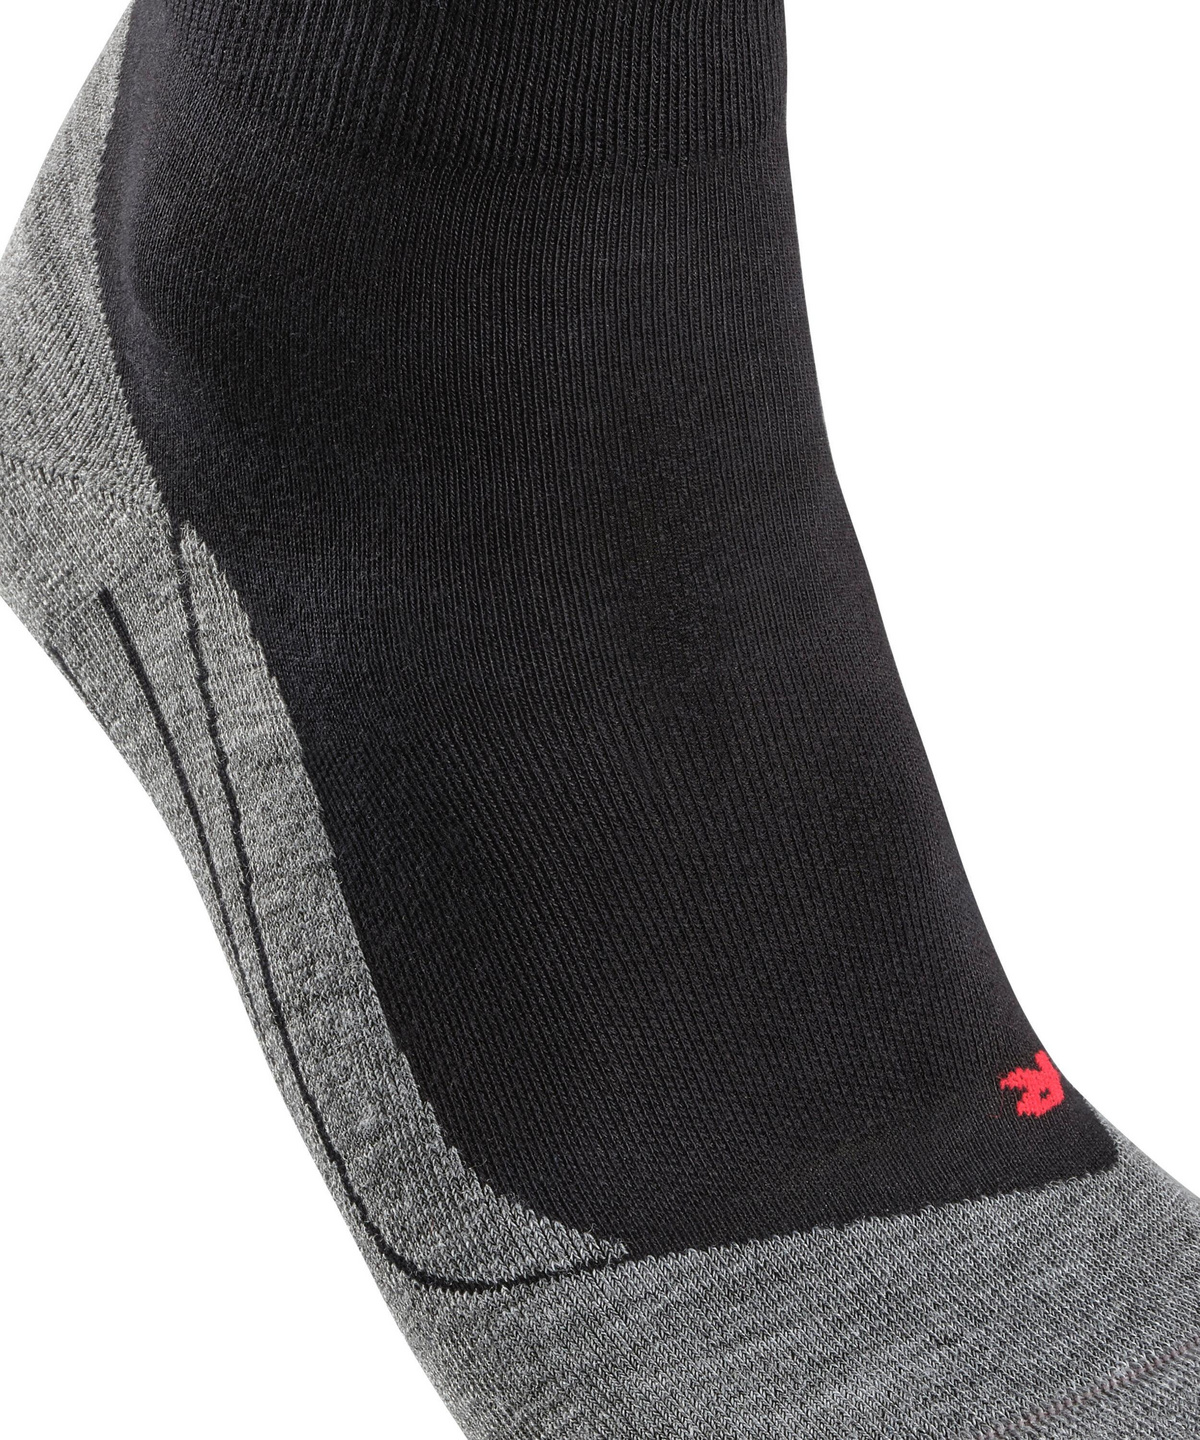 Falke caballeros ru4 short socks calcetines de deporte negros nuevo 